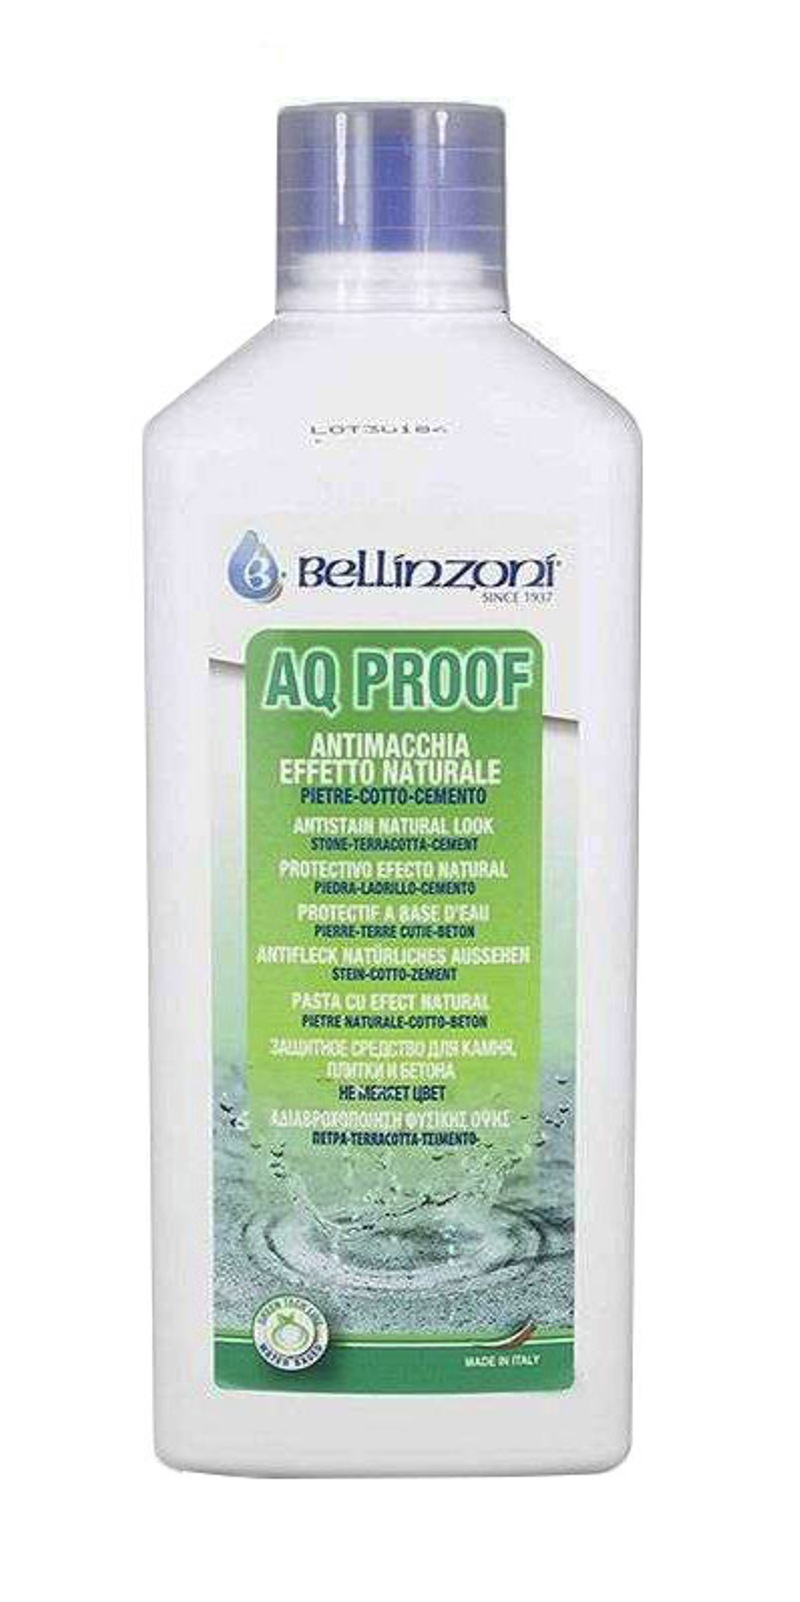 Bellinzoni - AQ PROOF / 1 liter